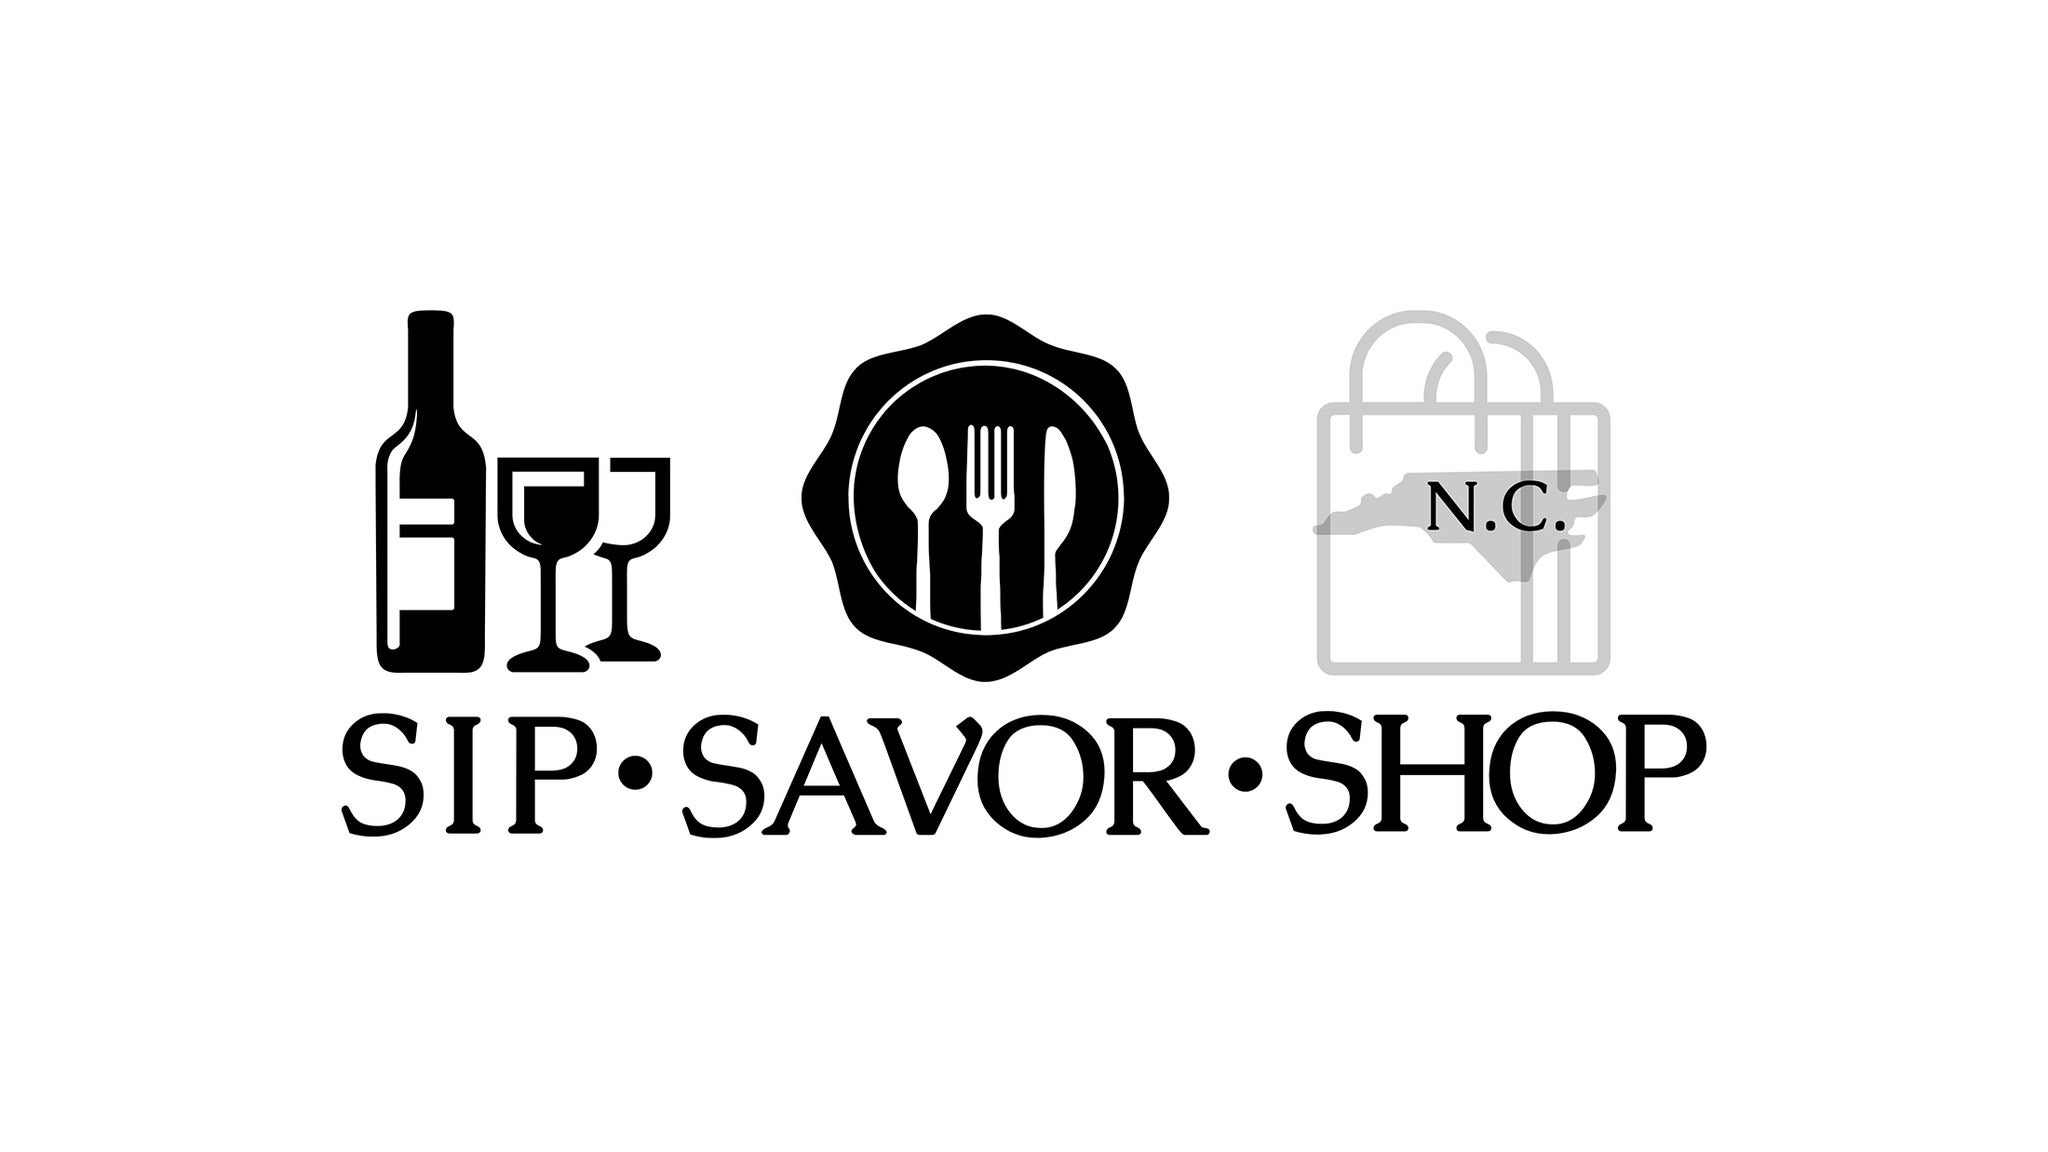 Sip Savor Shop NC presale information on freepresalepasswords.com